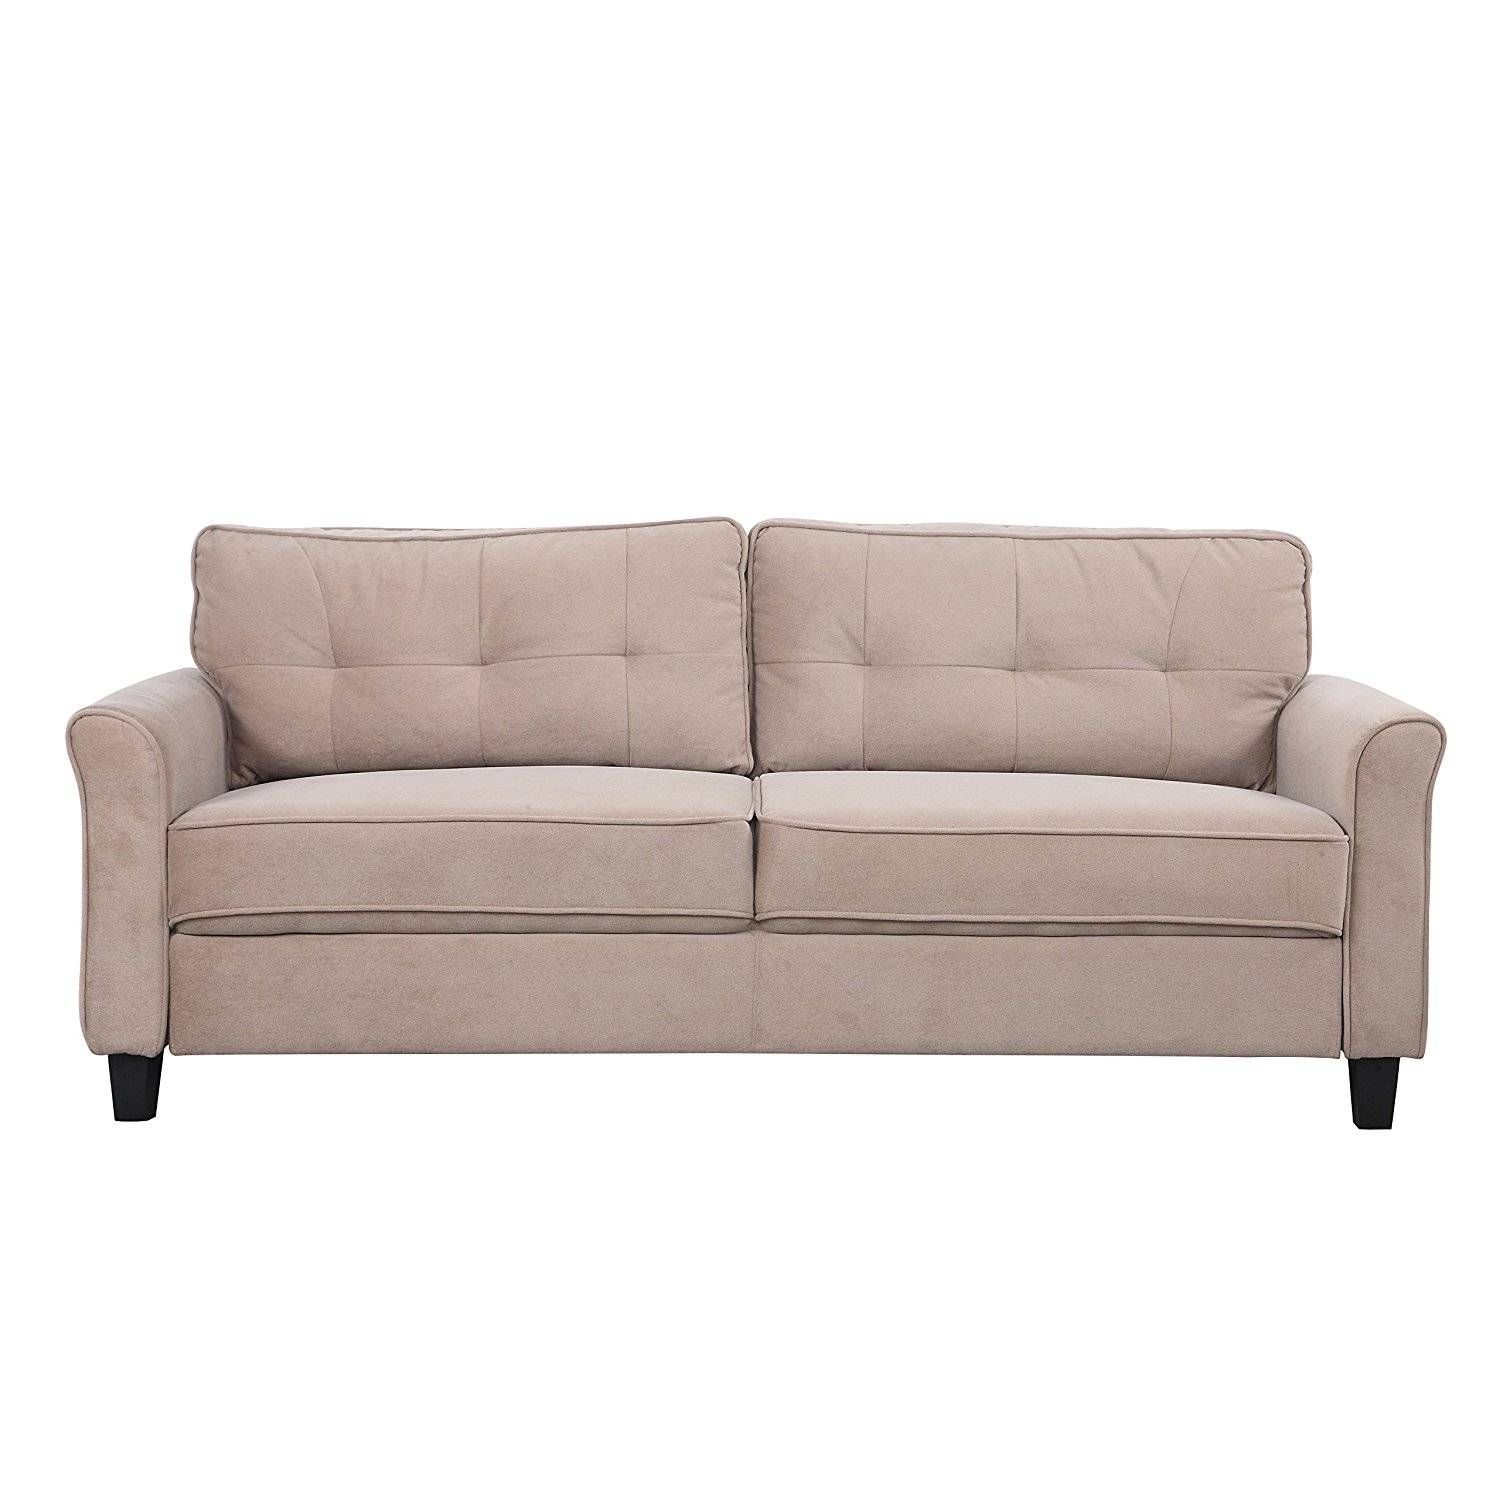 Craigslist Sleeper Sofa – Leather Sectional Sofa In Craigslist Sleeper Sofa (View 15 of 30)